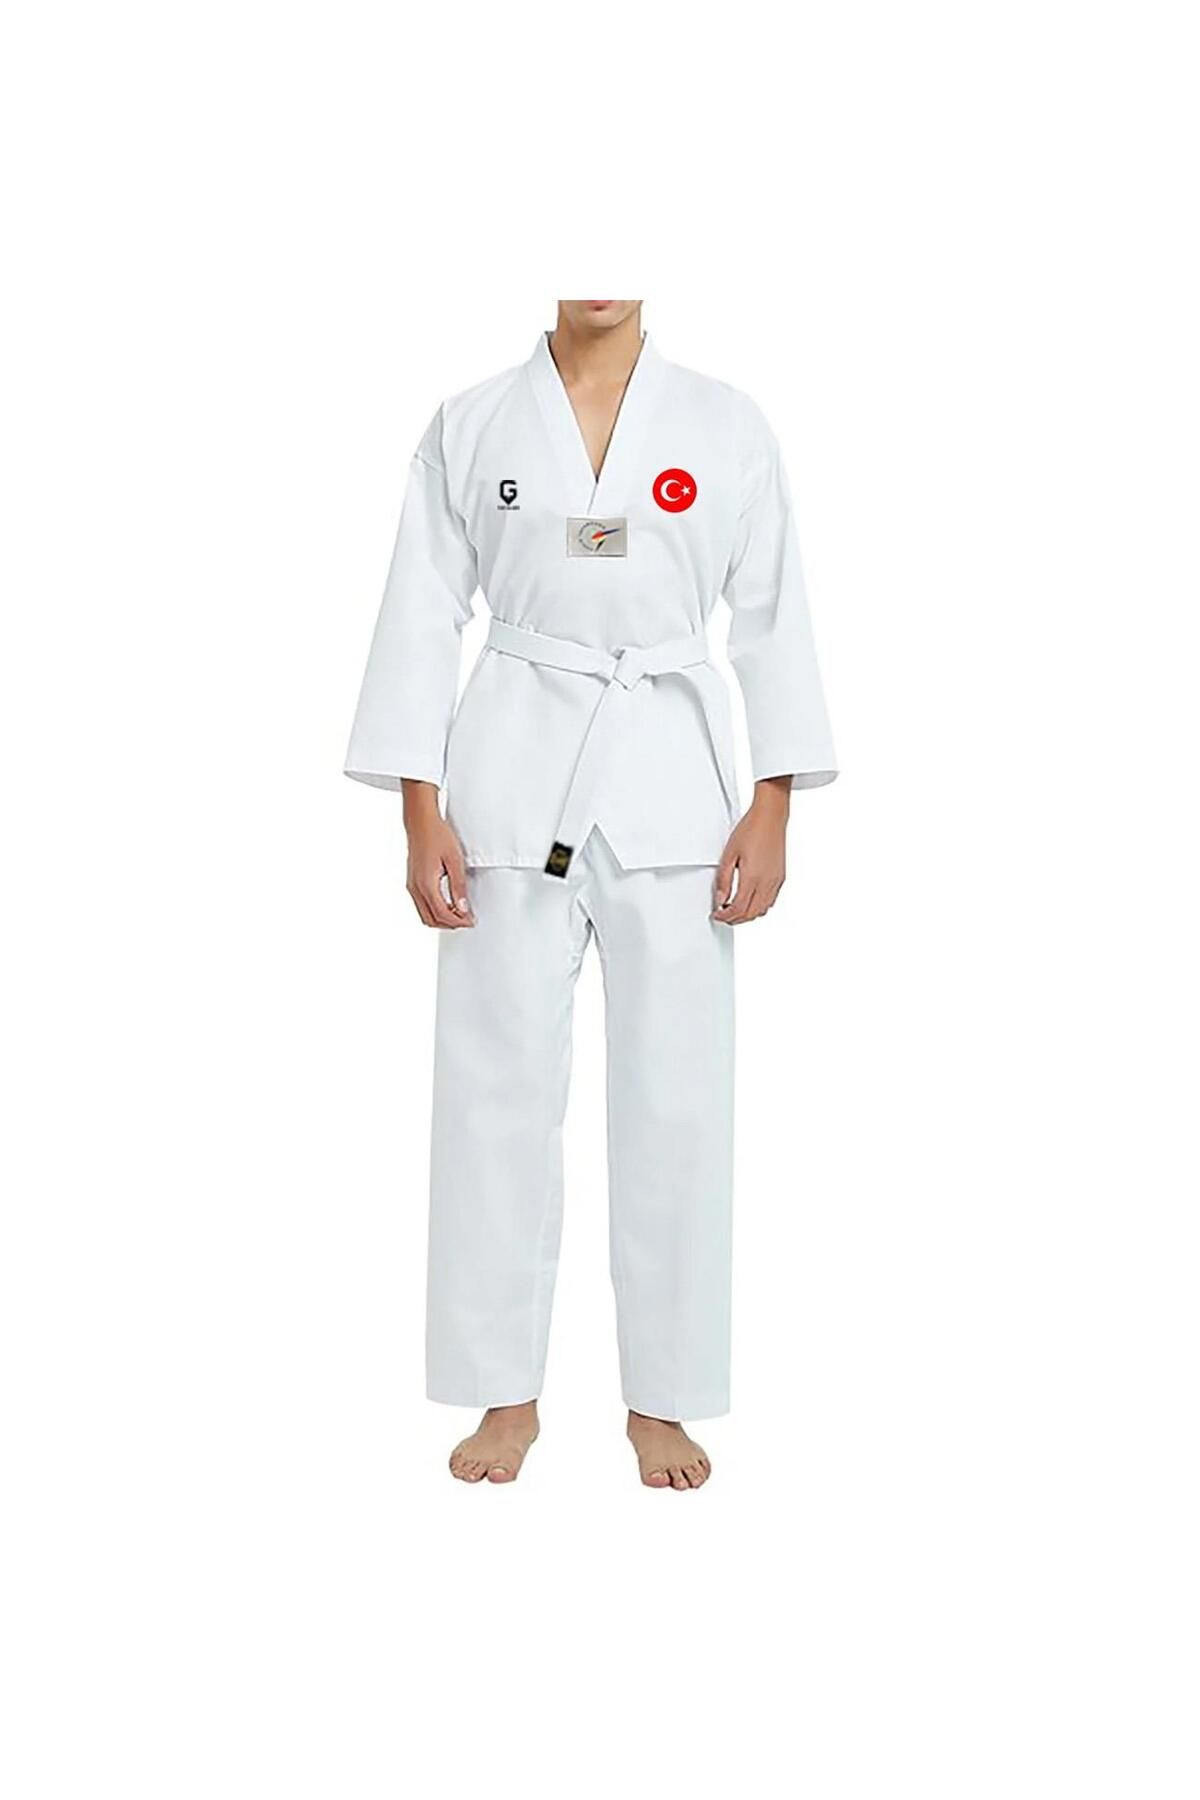 TOP GLORY Tgbyt000 Beyaz Yaka Taekwondo Elbisesi Beyaz